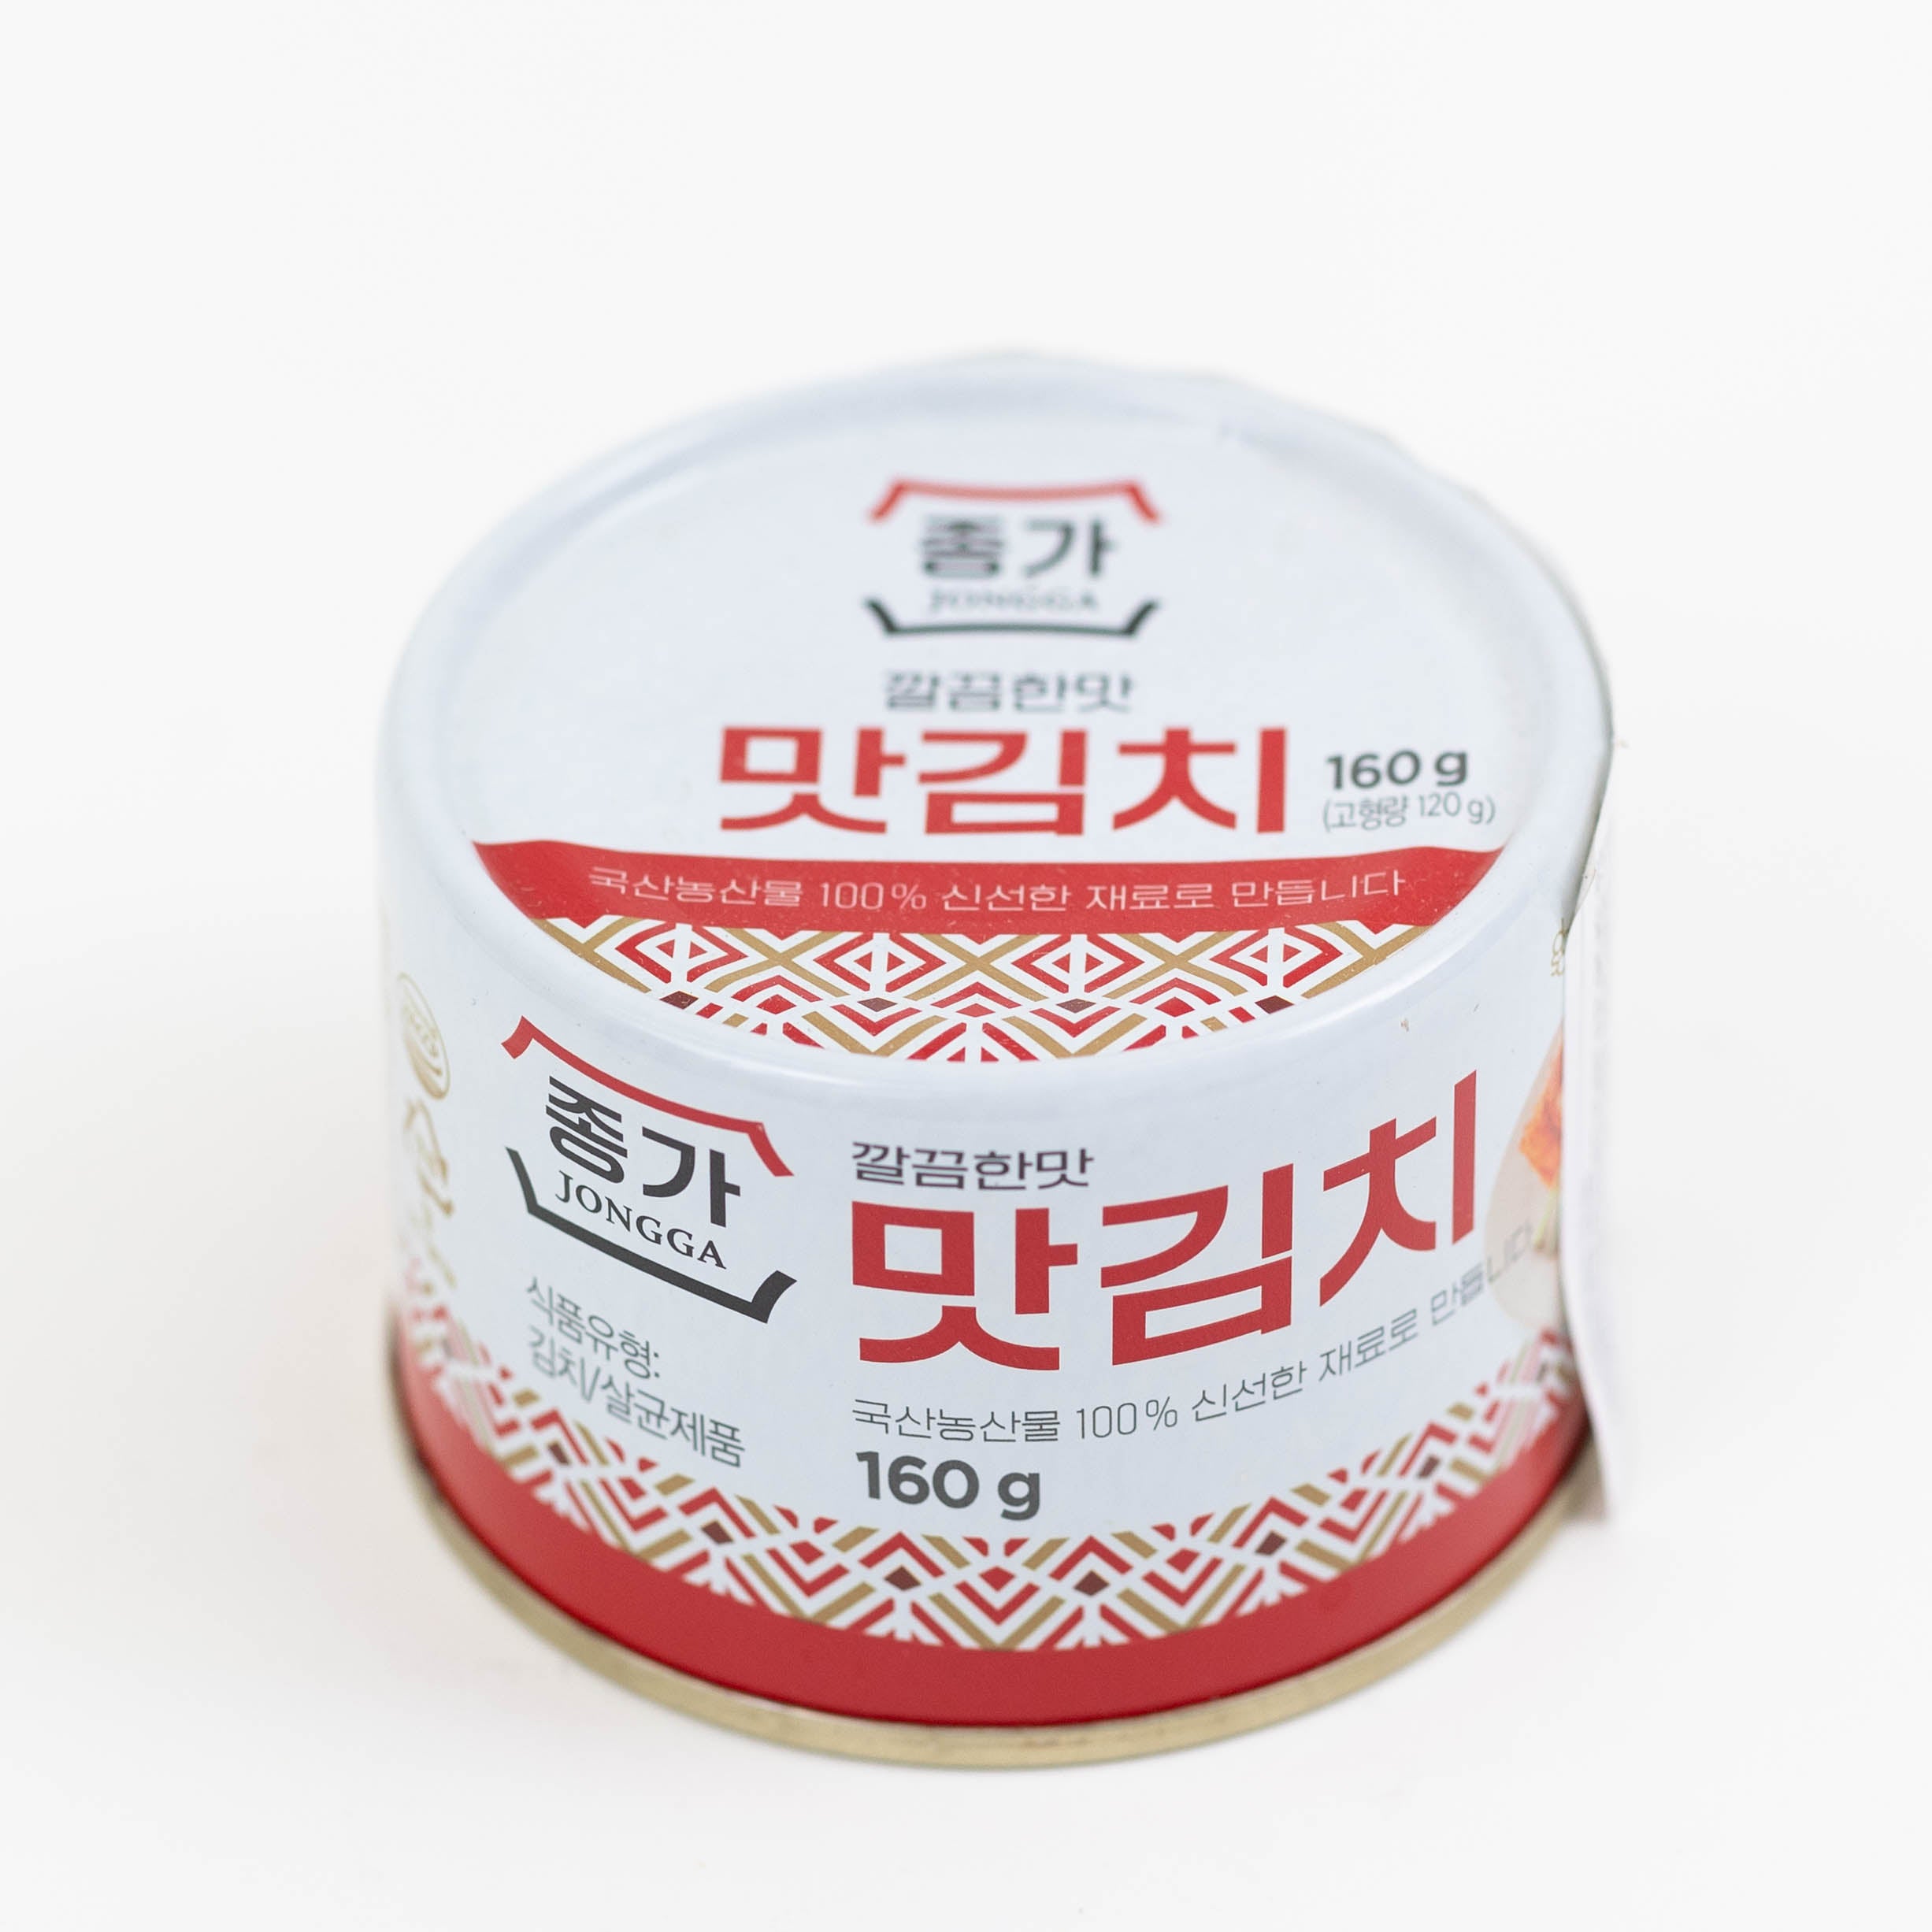 onlineshop dinese.de asiashop jongga kimchi dose 160gramm asiatische lebensmittel